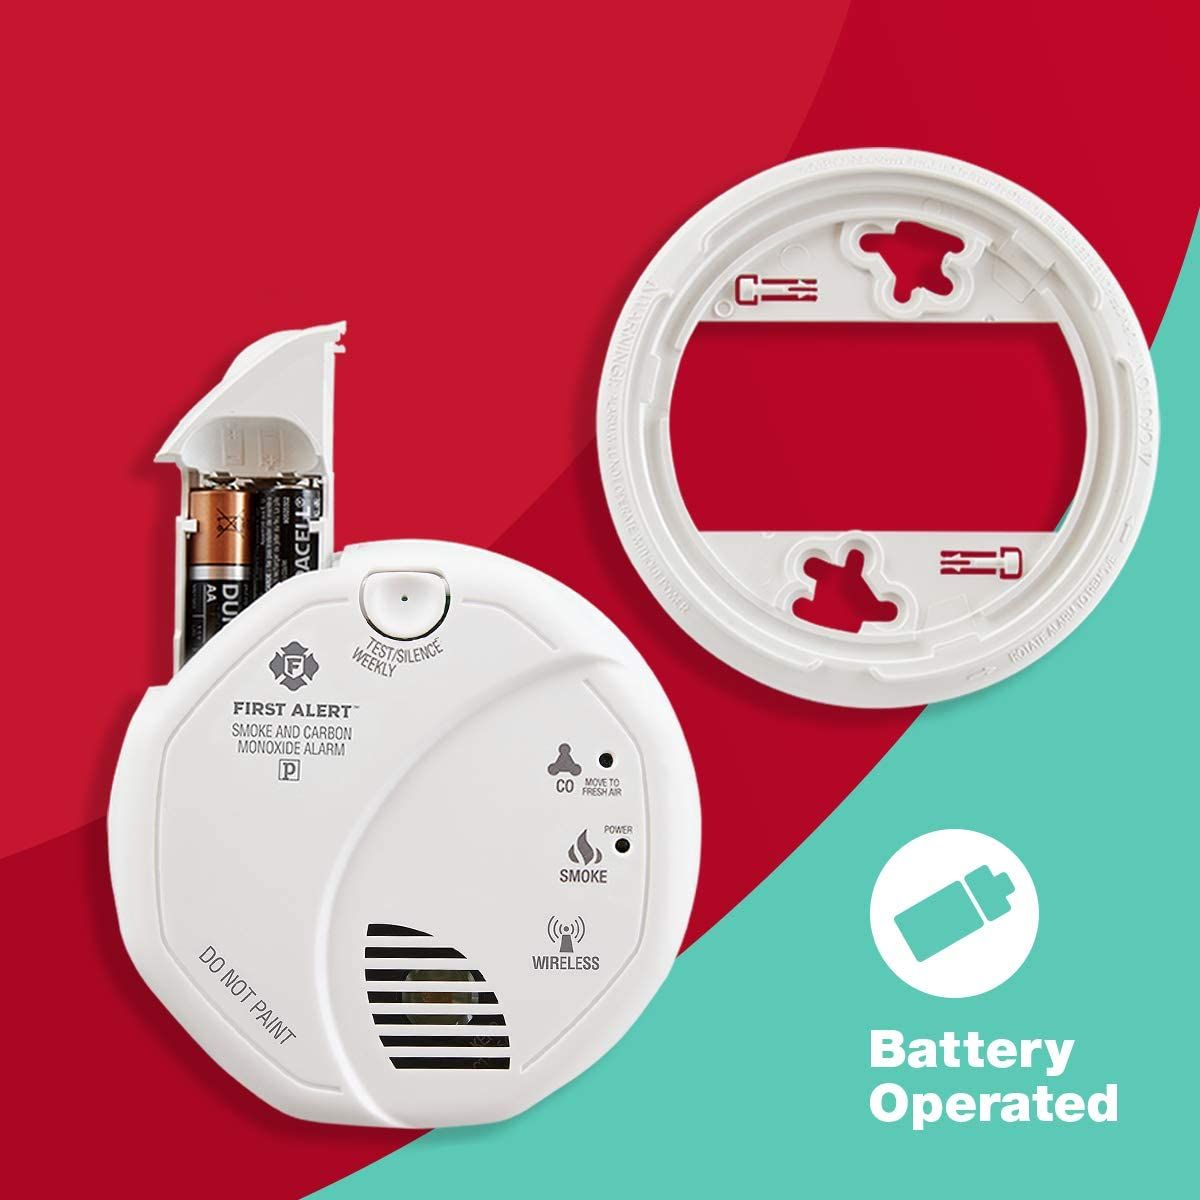 First Alert Z-Wave Smoke Detector & Carbon Monoxide Alarm battery